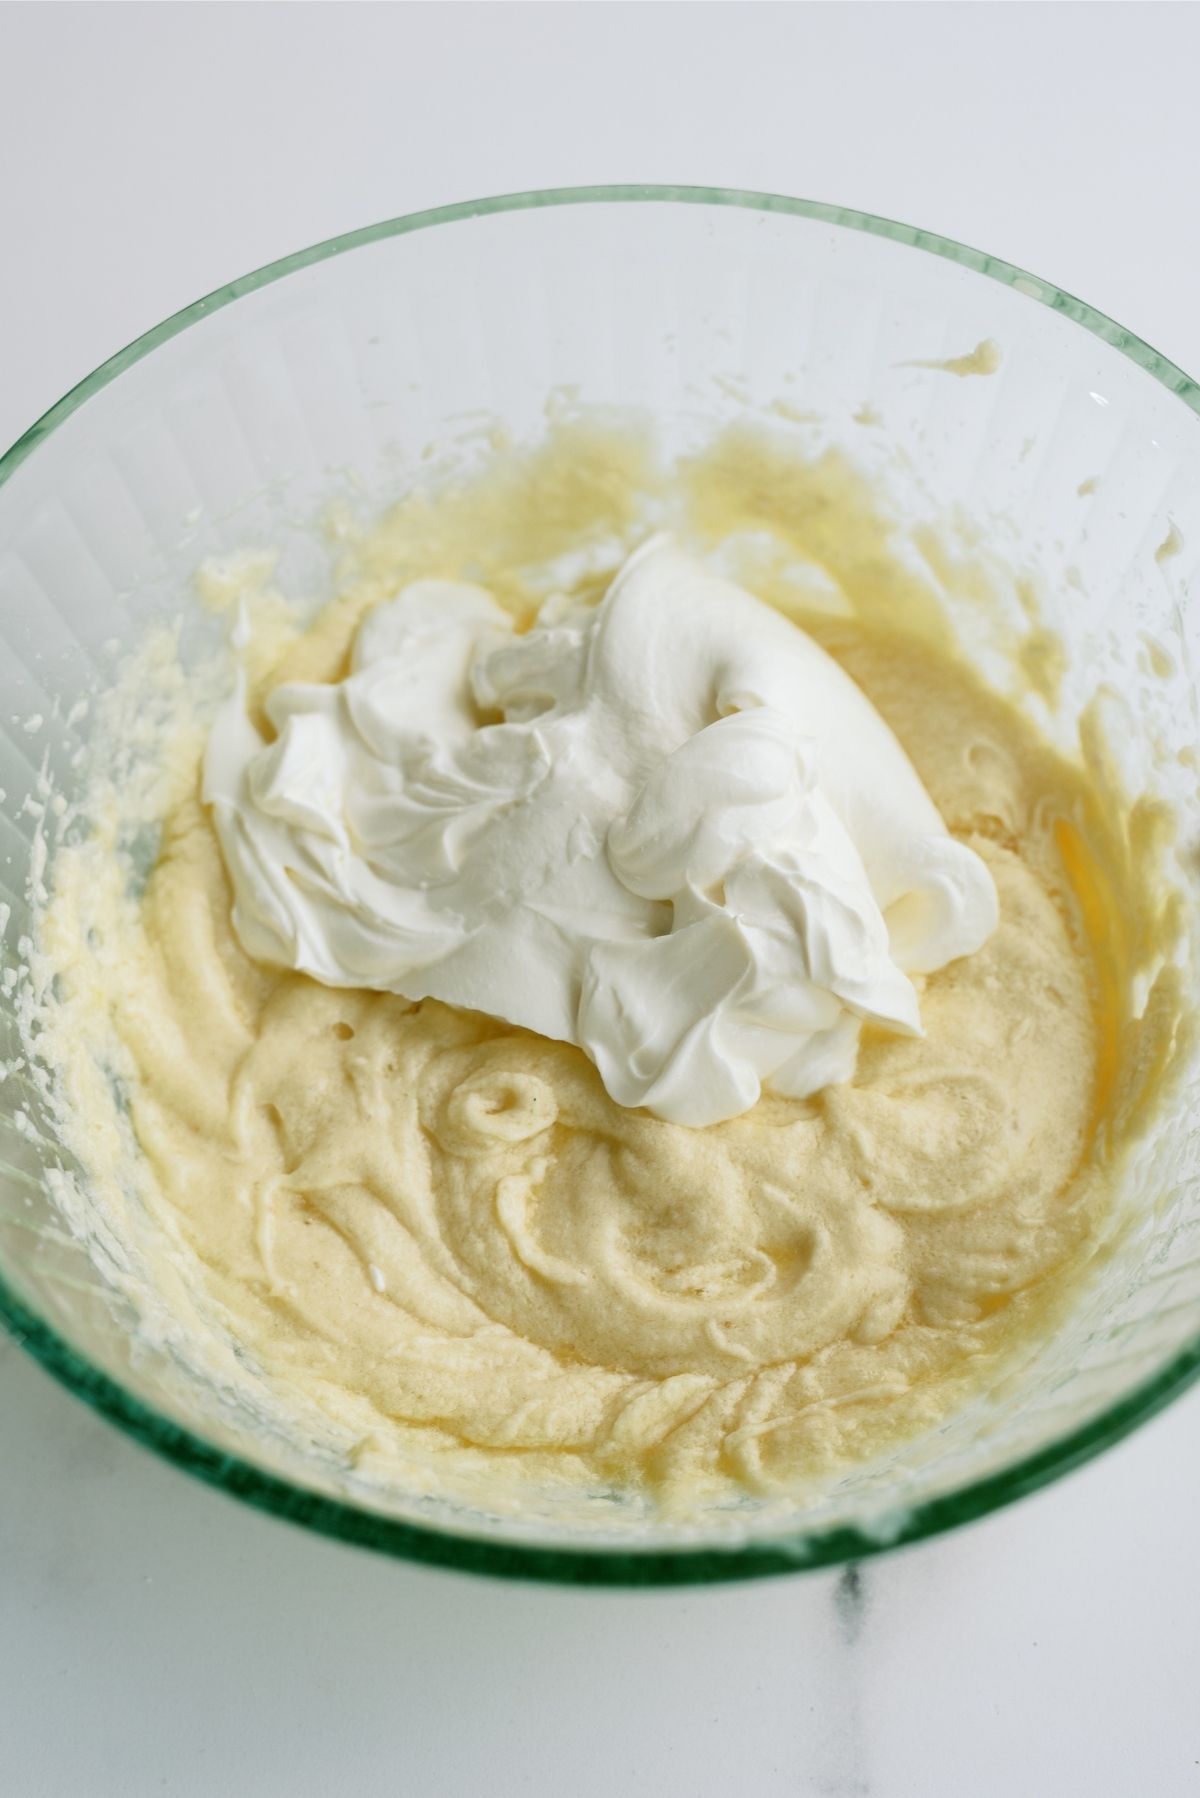 Adding sour cream to the mixture